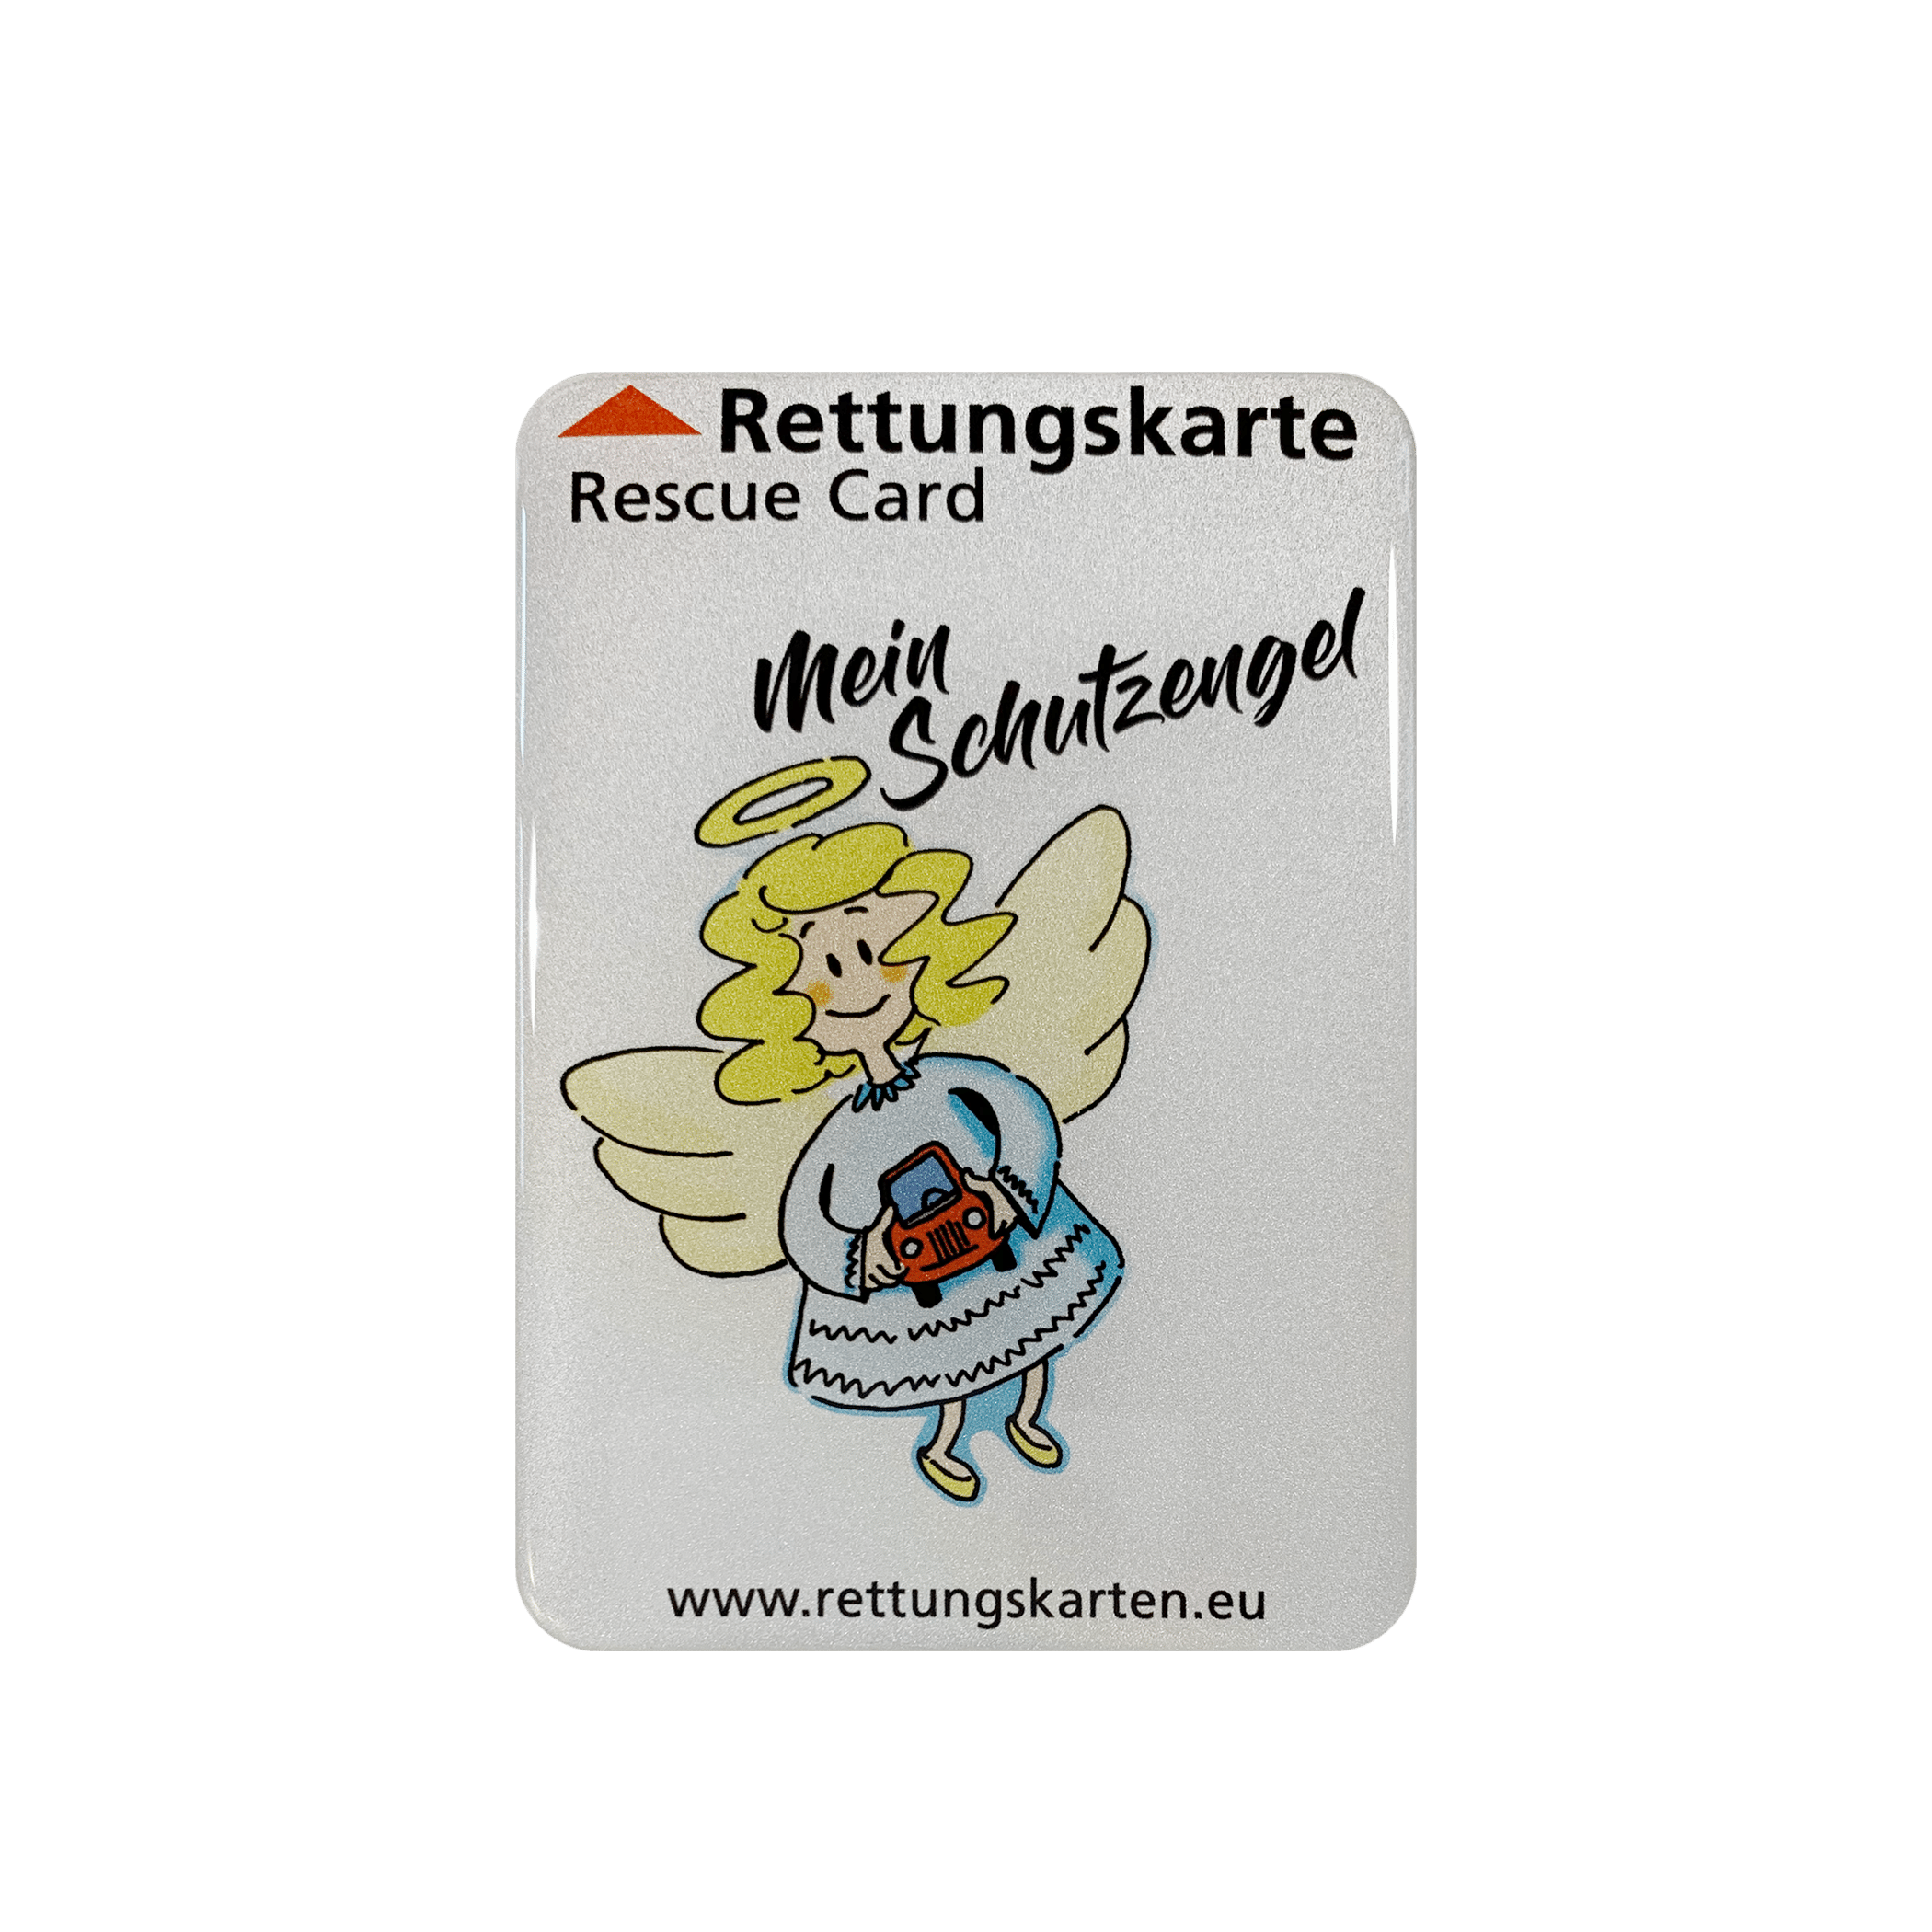 https://www.rettungskarten.eu/wp-content/uploads/2021/12/KFZ-PKW-Auto-Car-Rettungskarten-Rescue-Card-Rettungsdatenblatt-Halterung-Tasche-Huelle-Safetybag-S-Front-Schutzengel.png